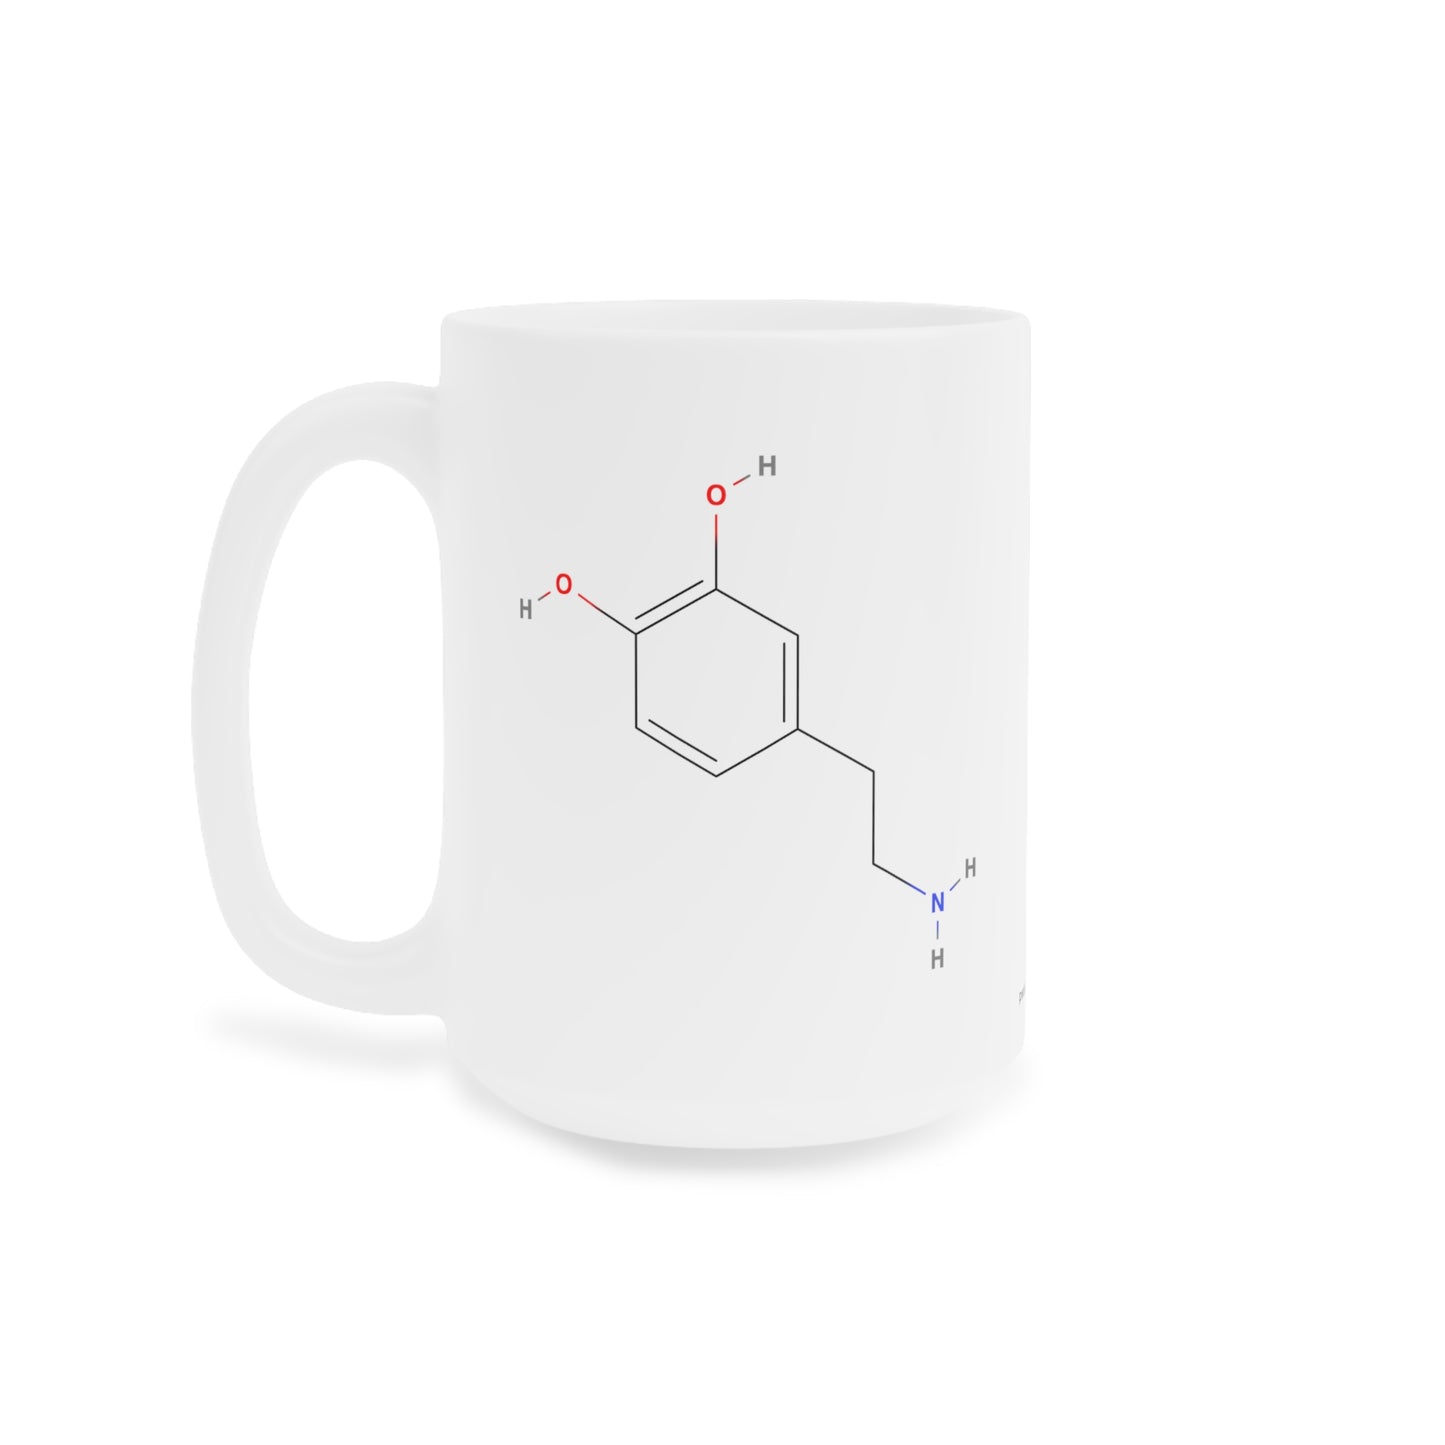 Coffee Mug 15oz - Dopamine